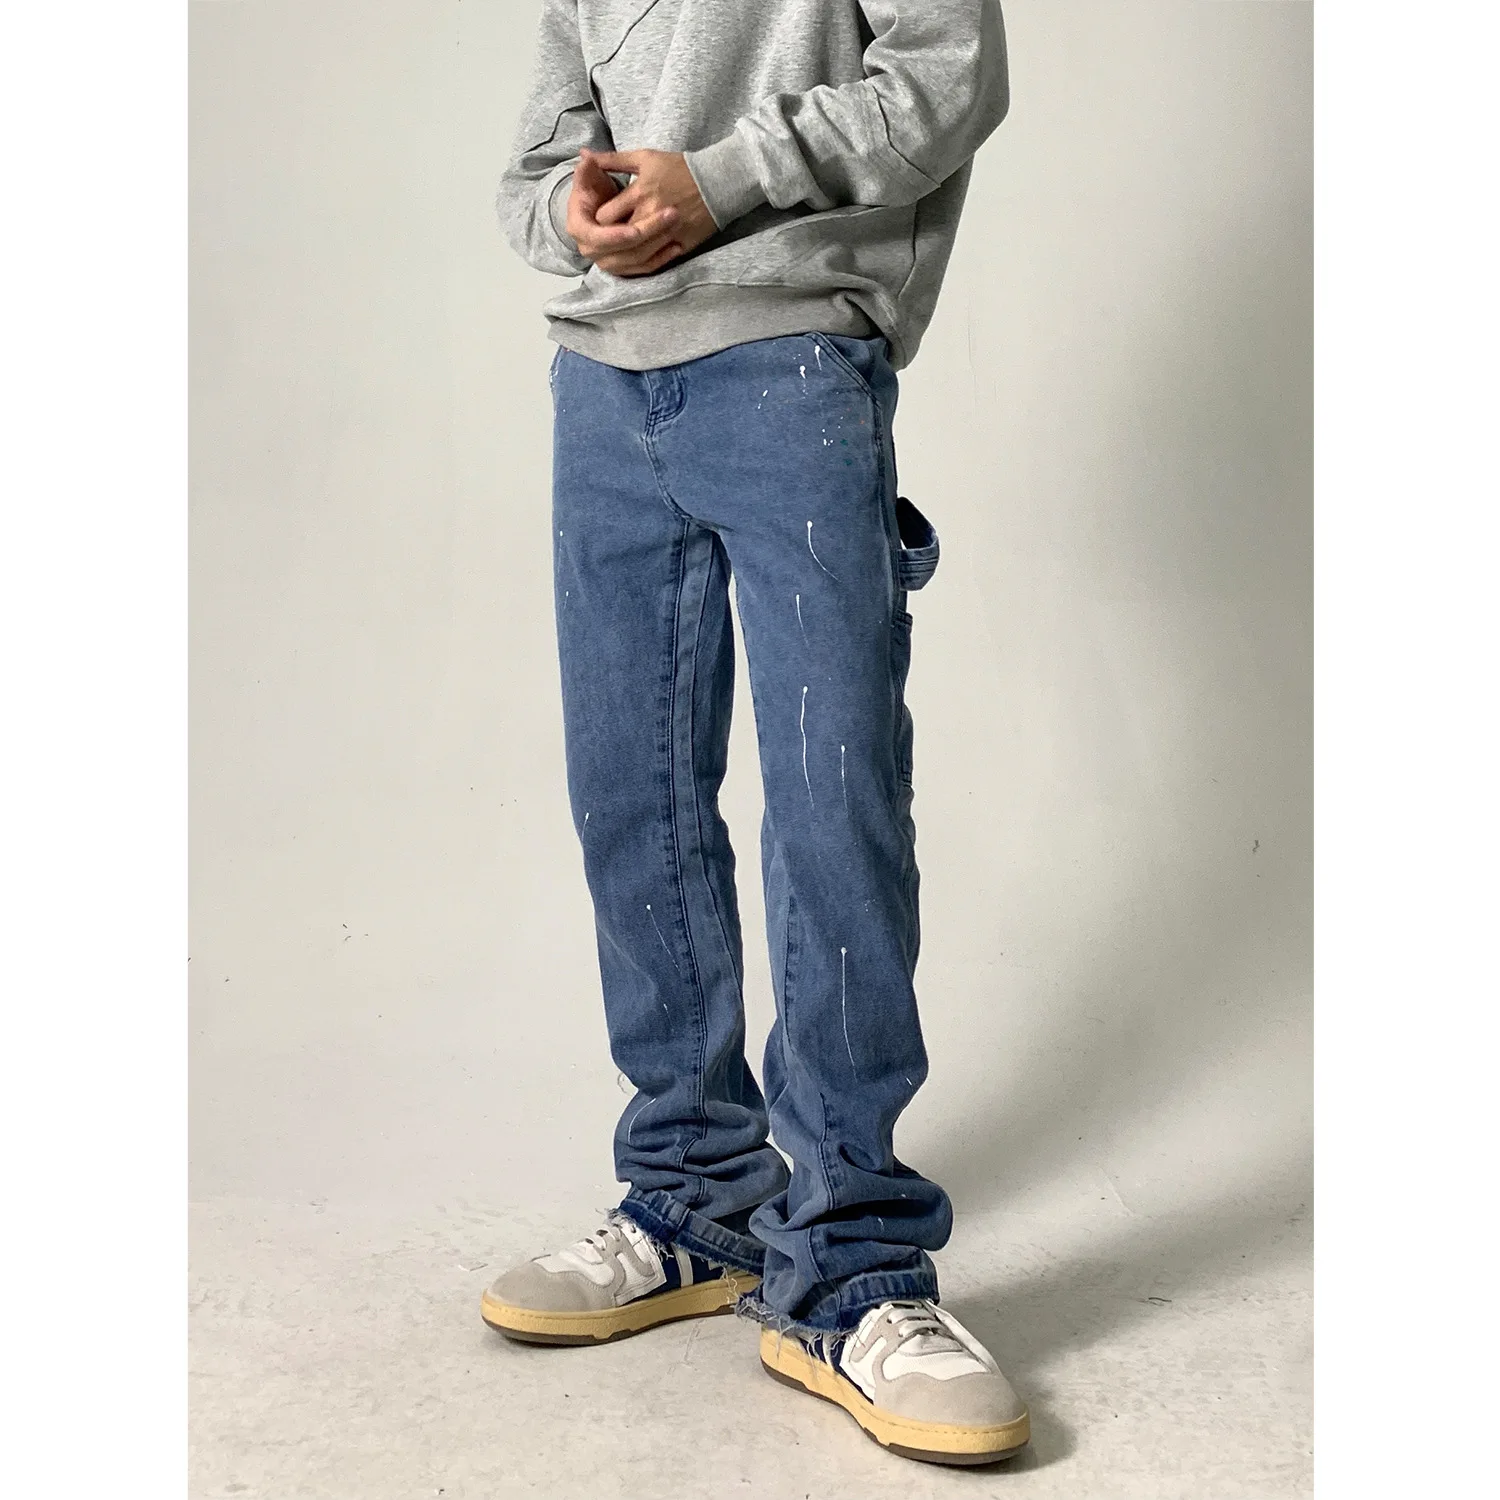 New Design Men s Baggy Jeans Denim Splicing Hand Painted Hip Hop ...